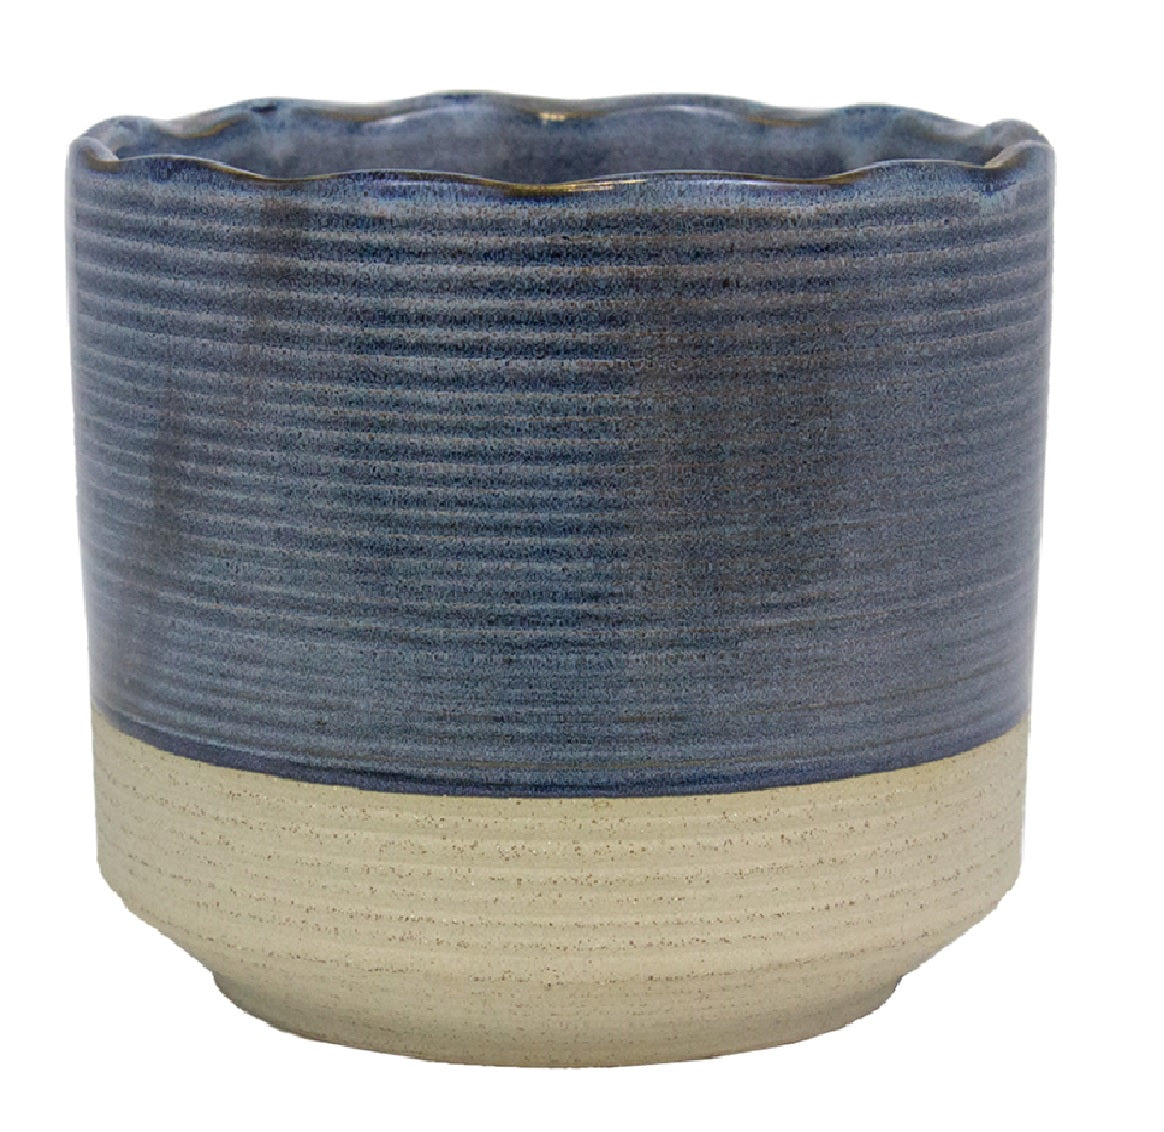 Trendspot CR900116N-065G Shore Cylinder Planter, Ceramic